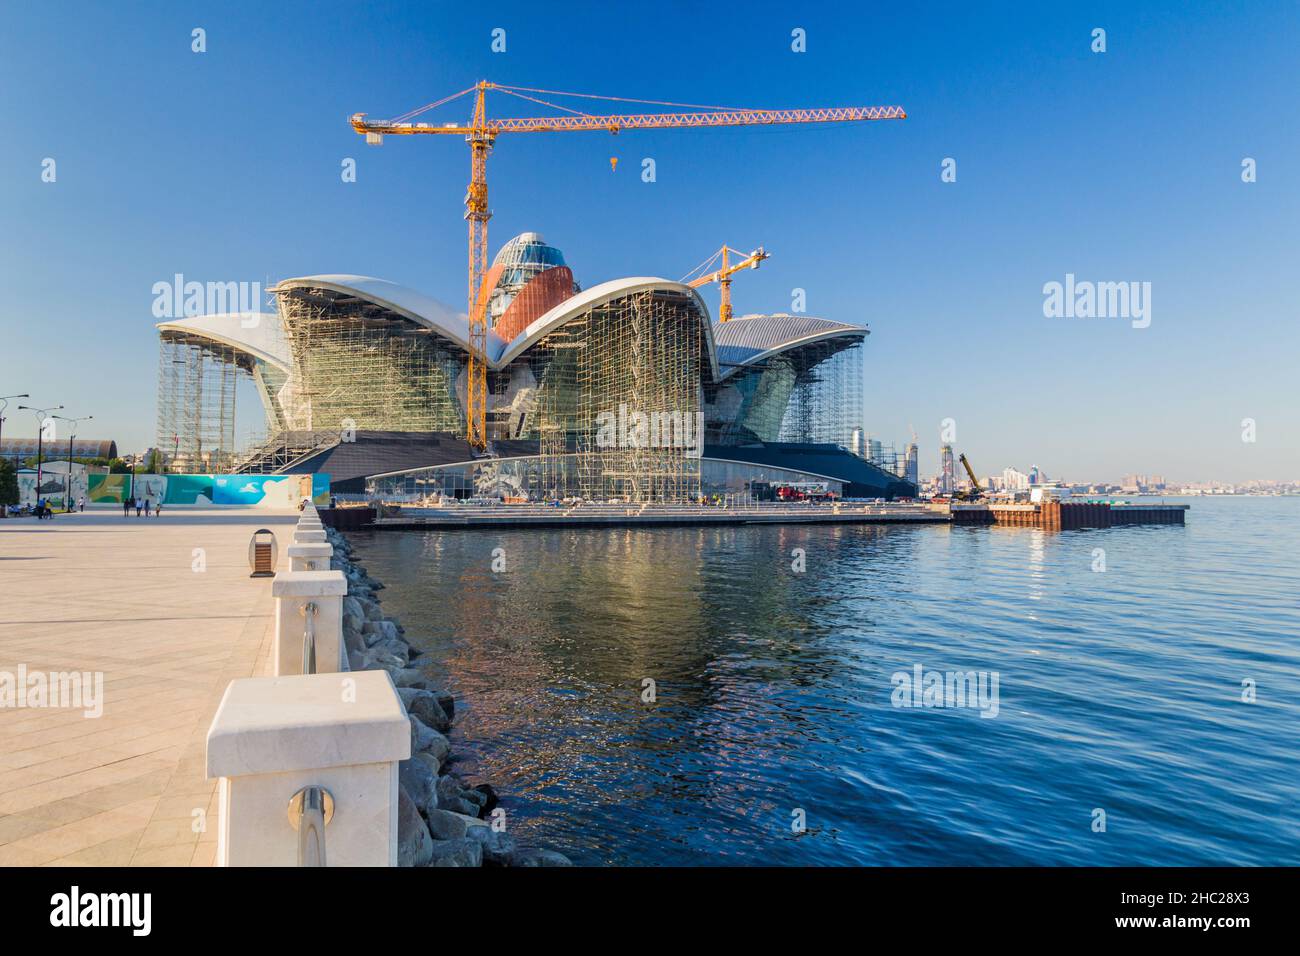 BAKU, ASERBAIDSCHAN - 6. JUNI 2018: Baustelle der Caspian Waterfront Mall in Baku, Aserbaidschan Stockfoto